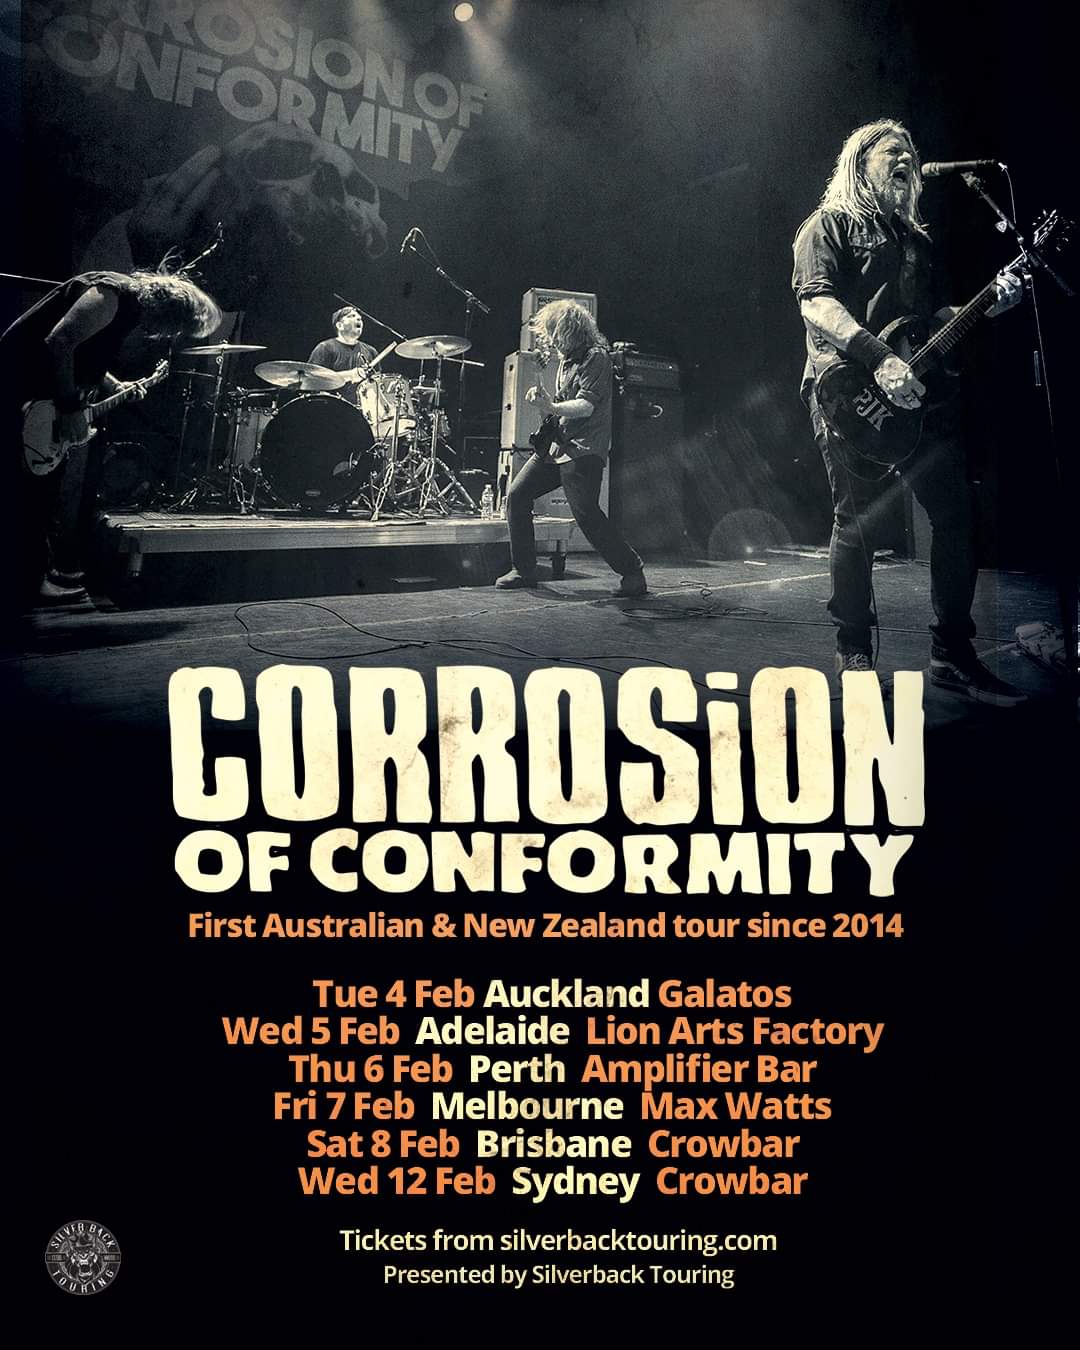 Corrosion Of Conformity announce Australia & New Zealand tour dates